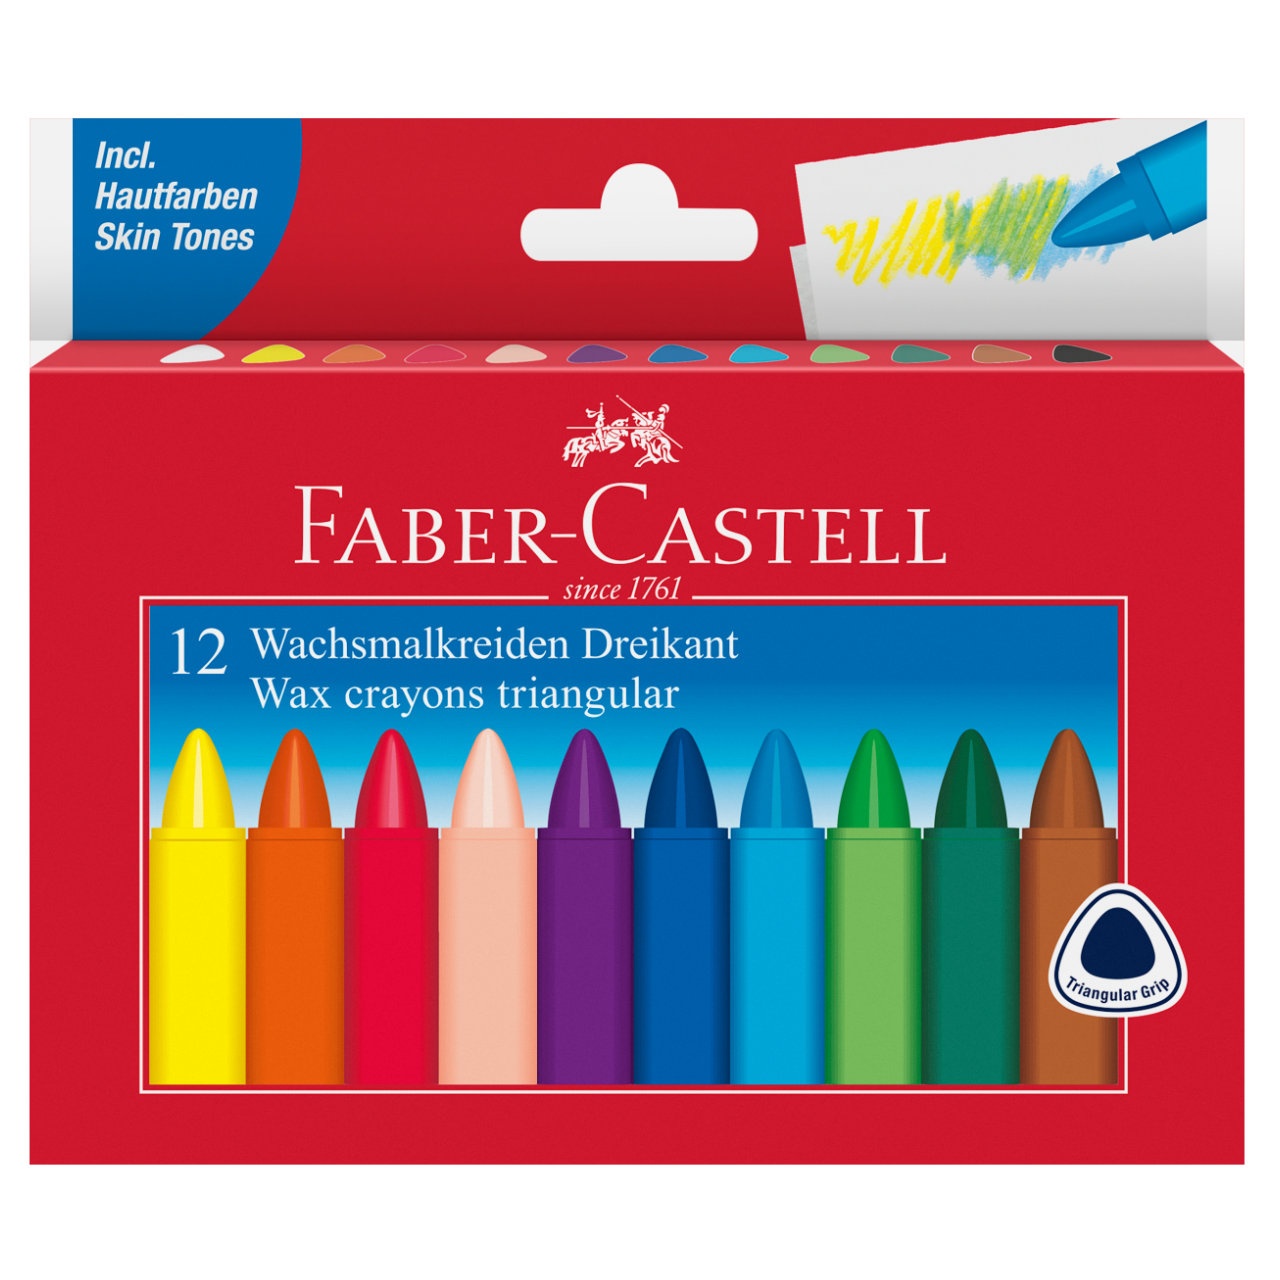 Triangular wax crayons set of 12 - buy now on architekturbedarf.de